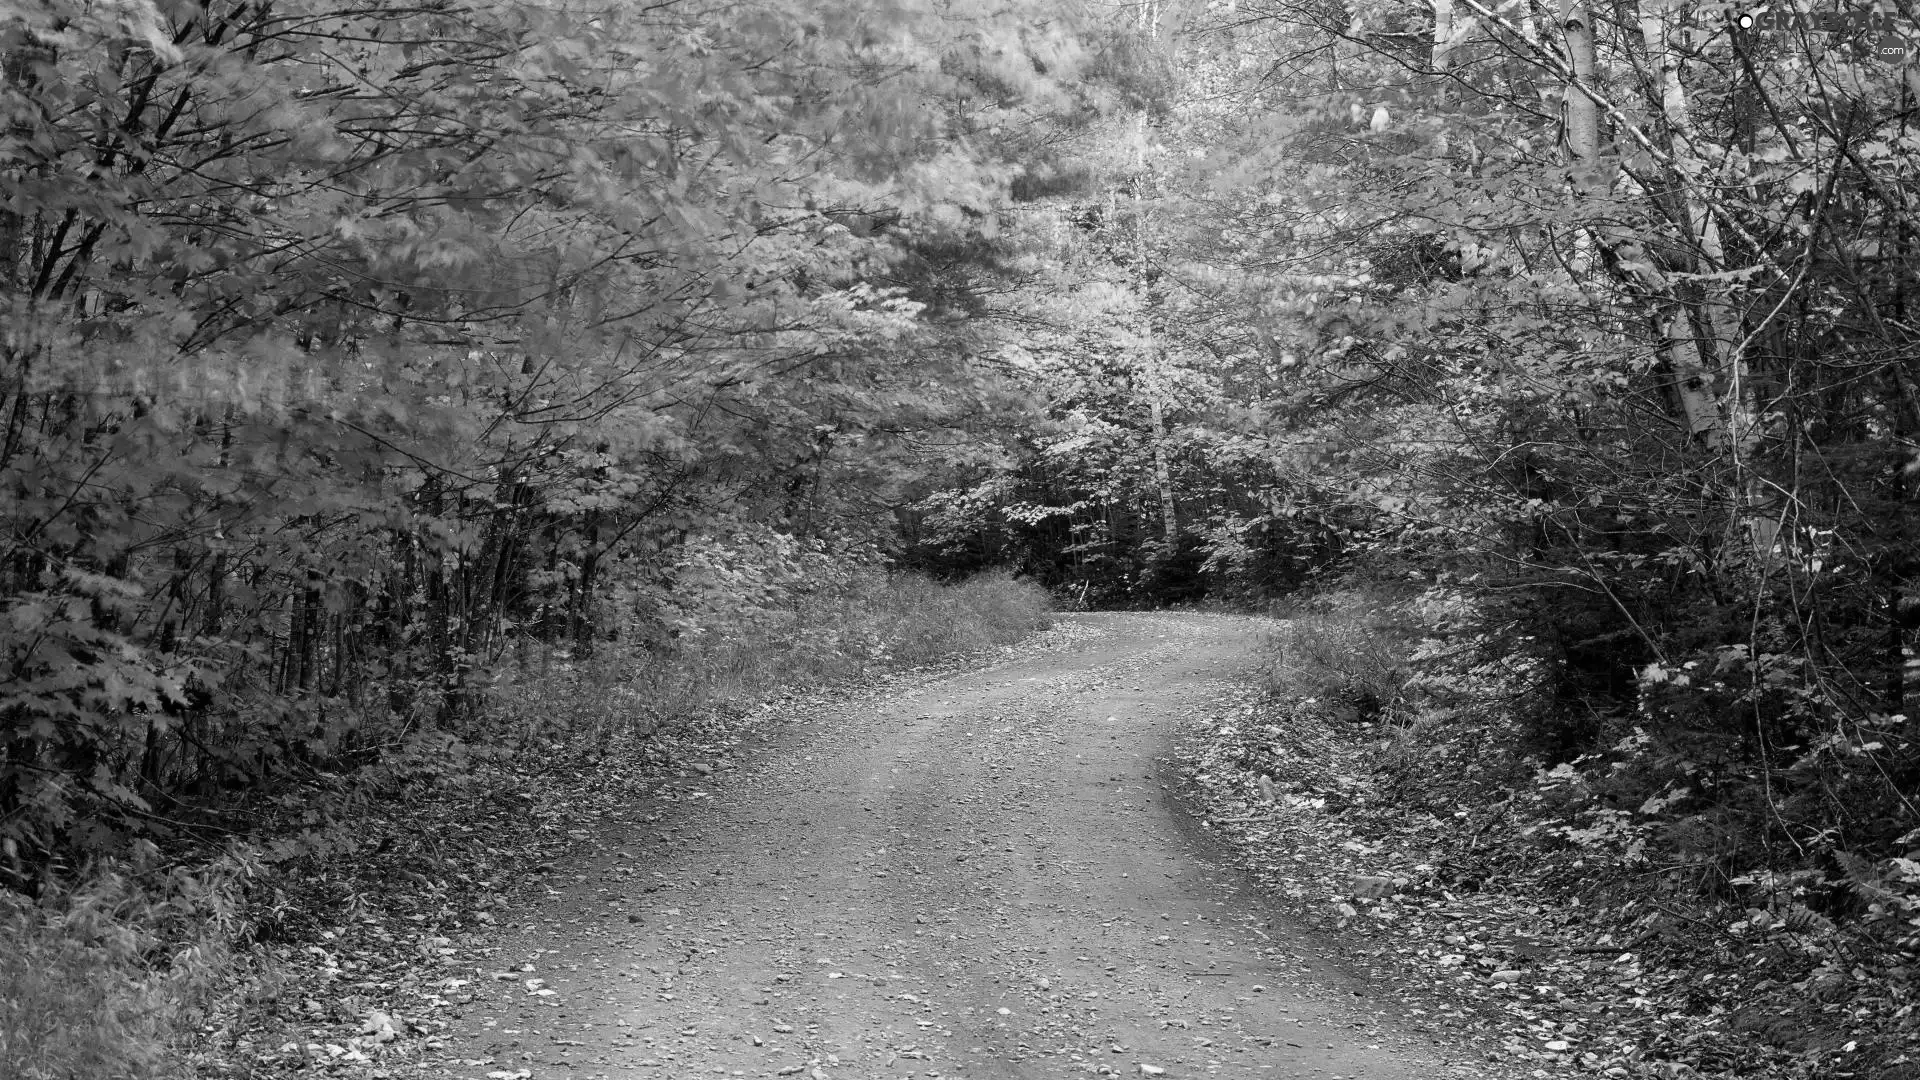 Path, forest, autumn